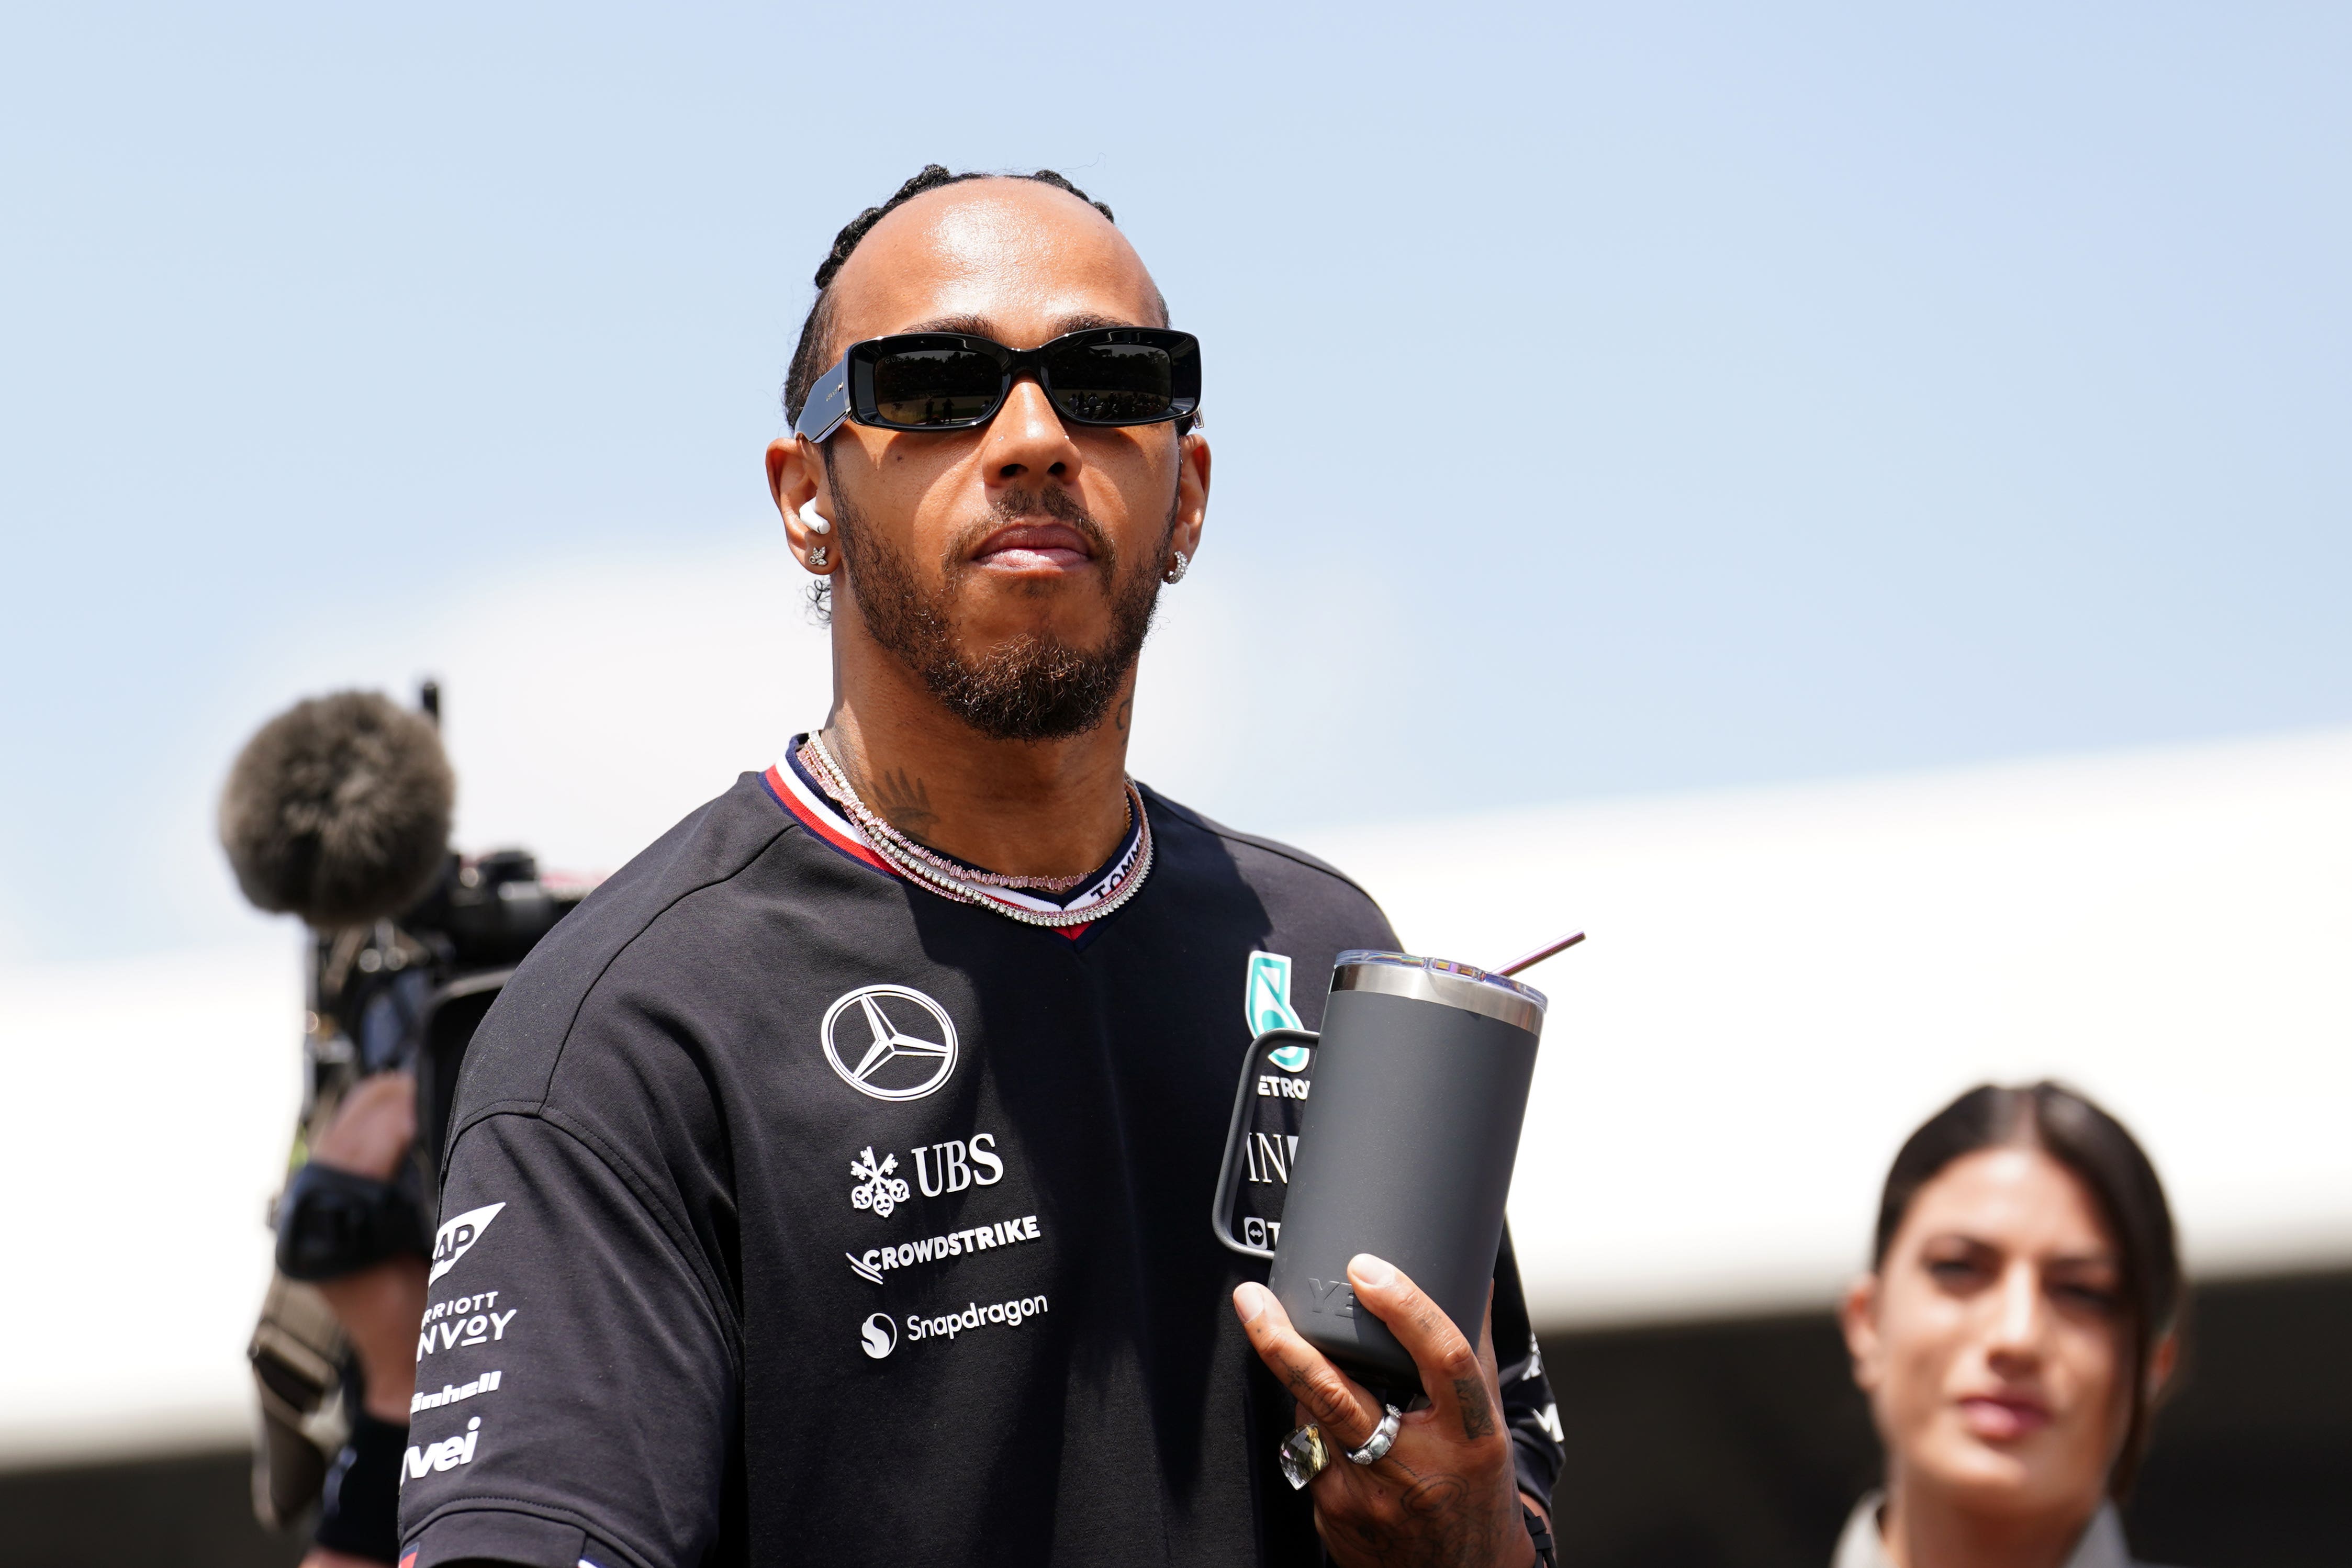 Lewis Hamilton has criticised this year’s Pirelli tyres